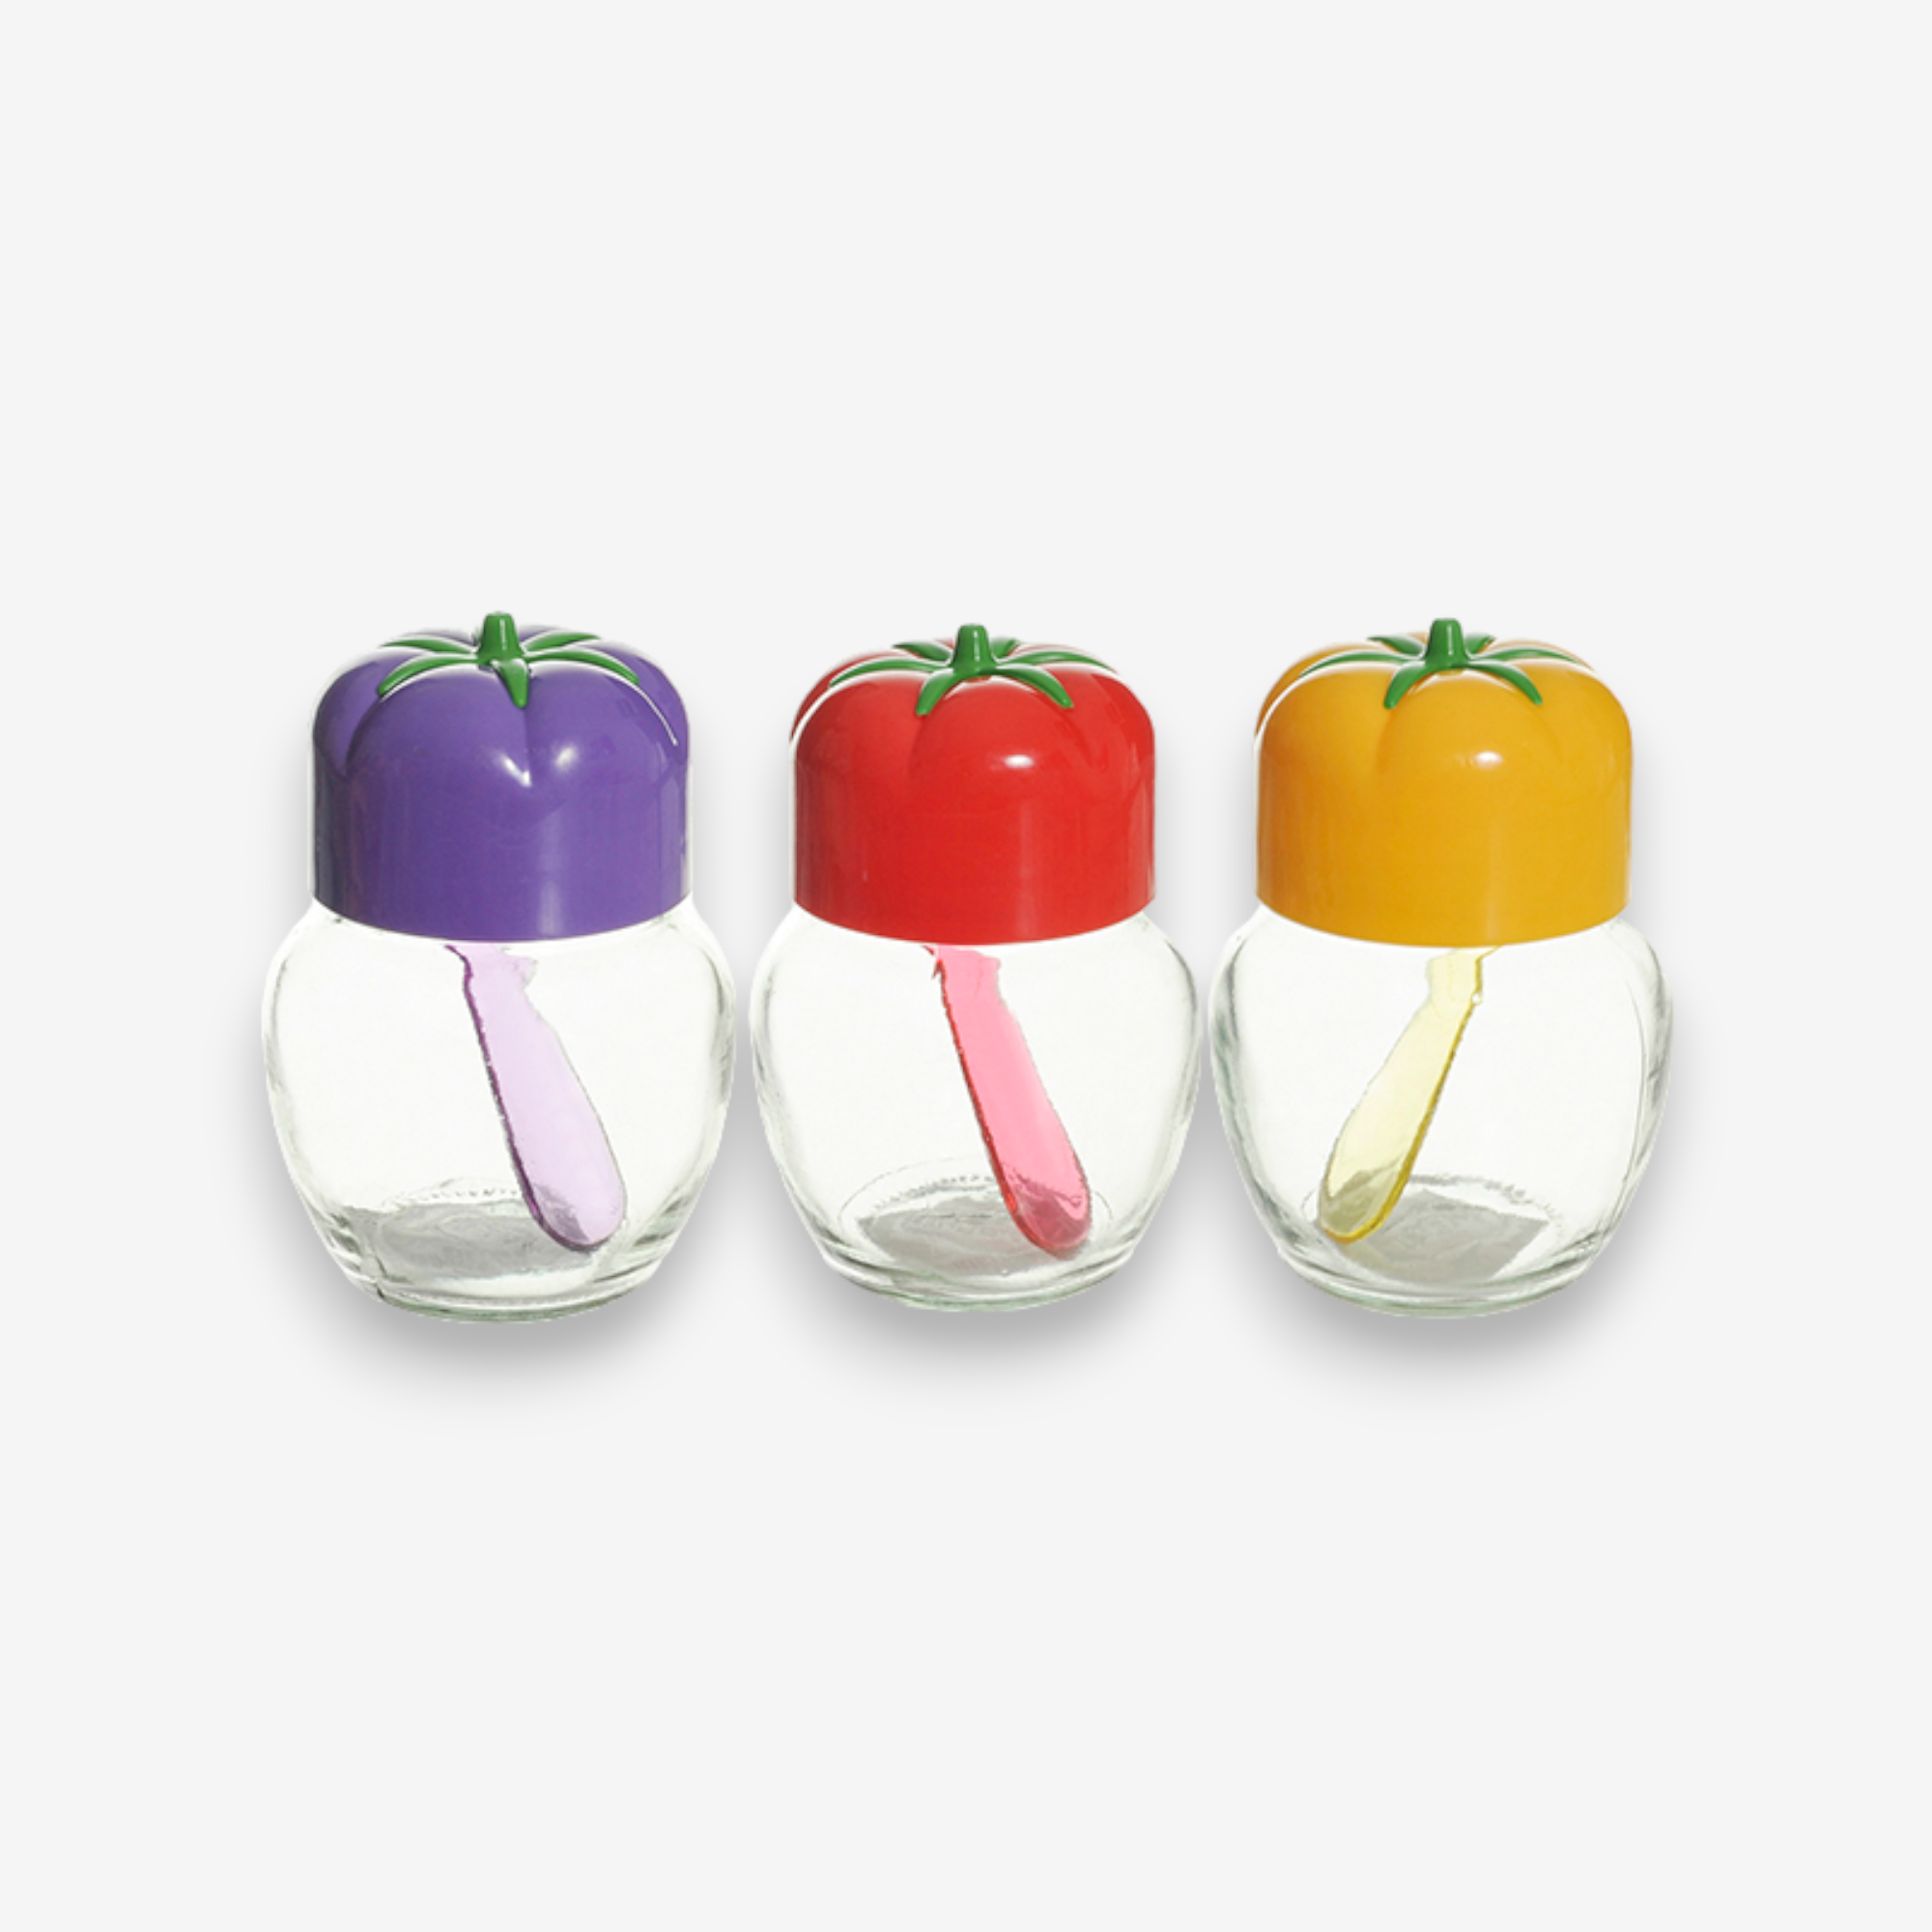 Tomato Shape Spice Jar with Plastic Spoon